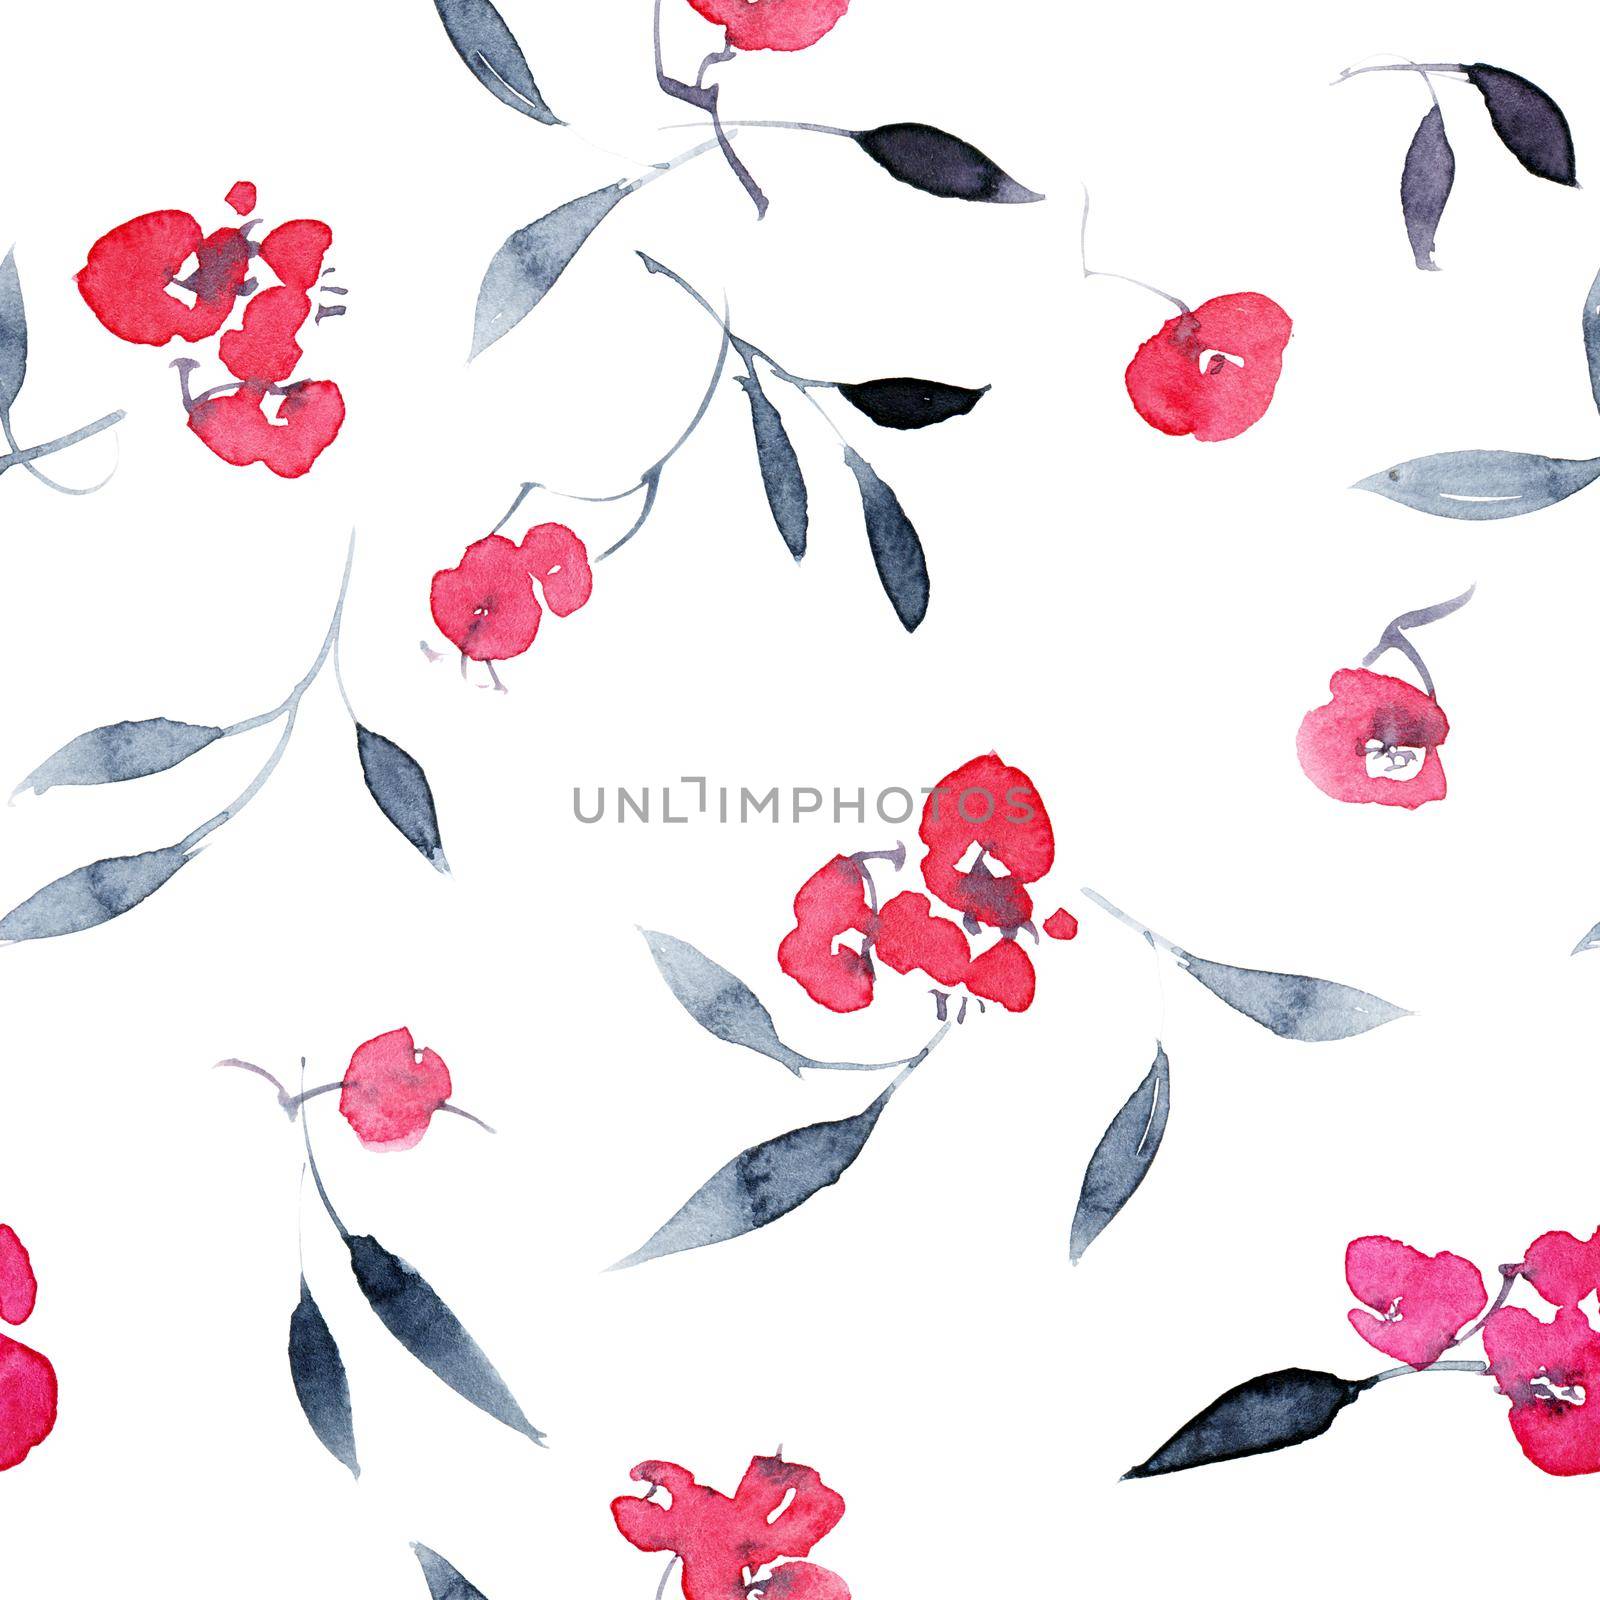 Pink flowers and leaves by Olatarakanova